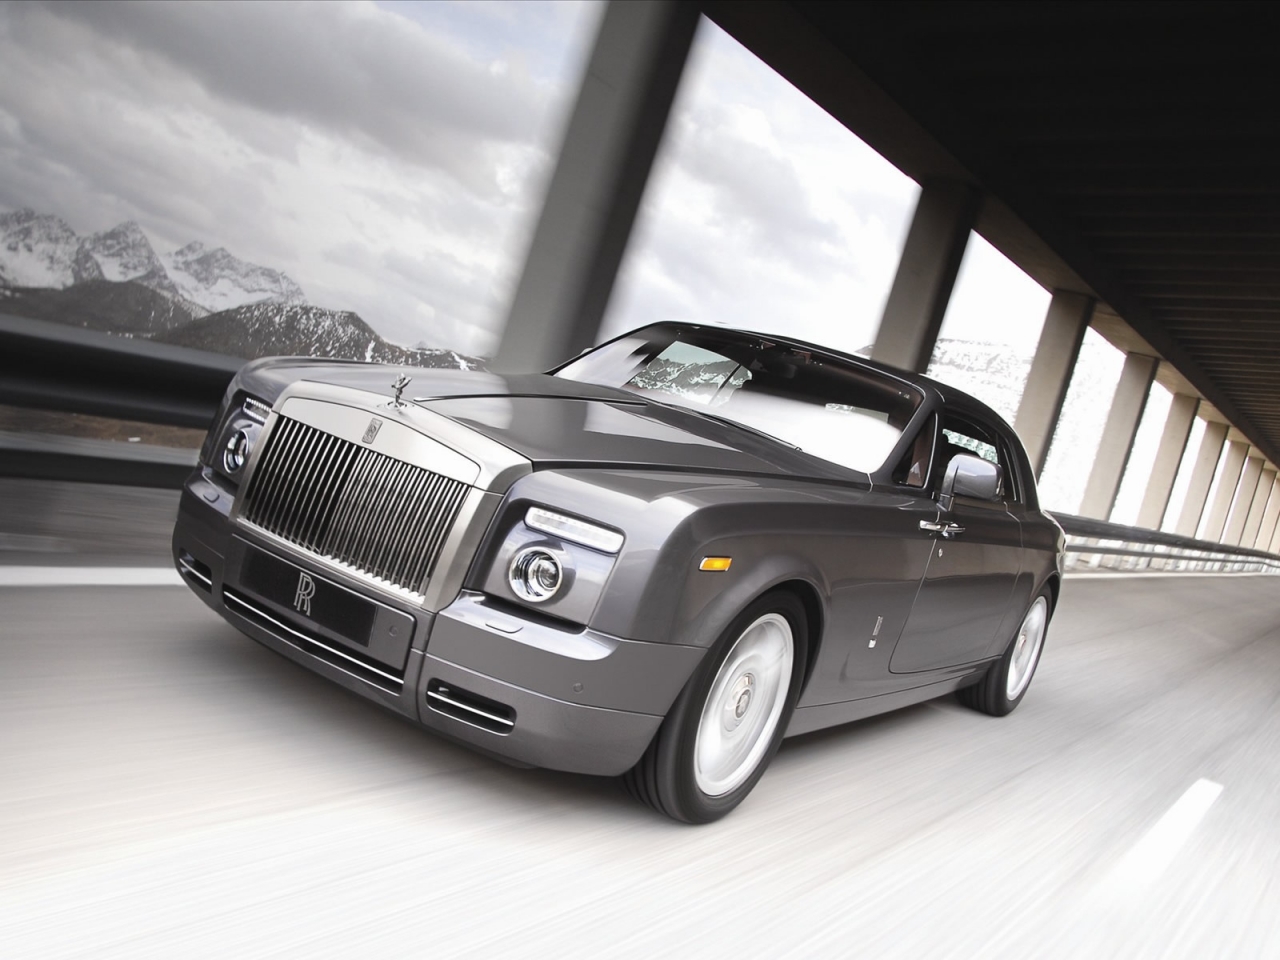 Superb Silver Rolls Royce for 1280 x 960 resolution